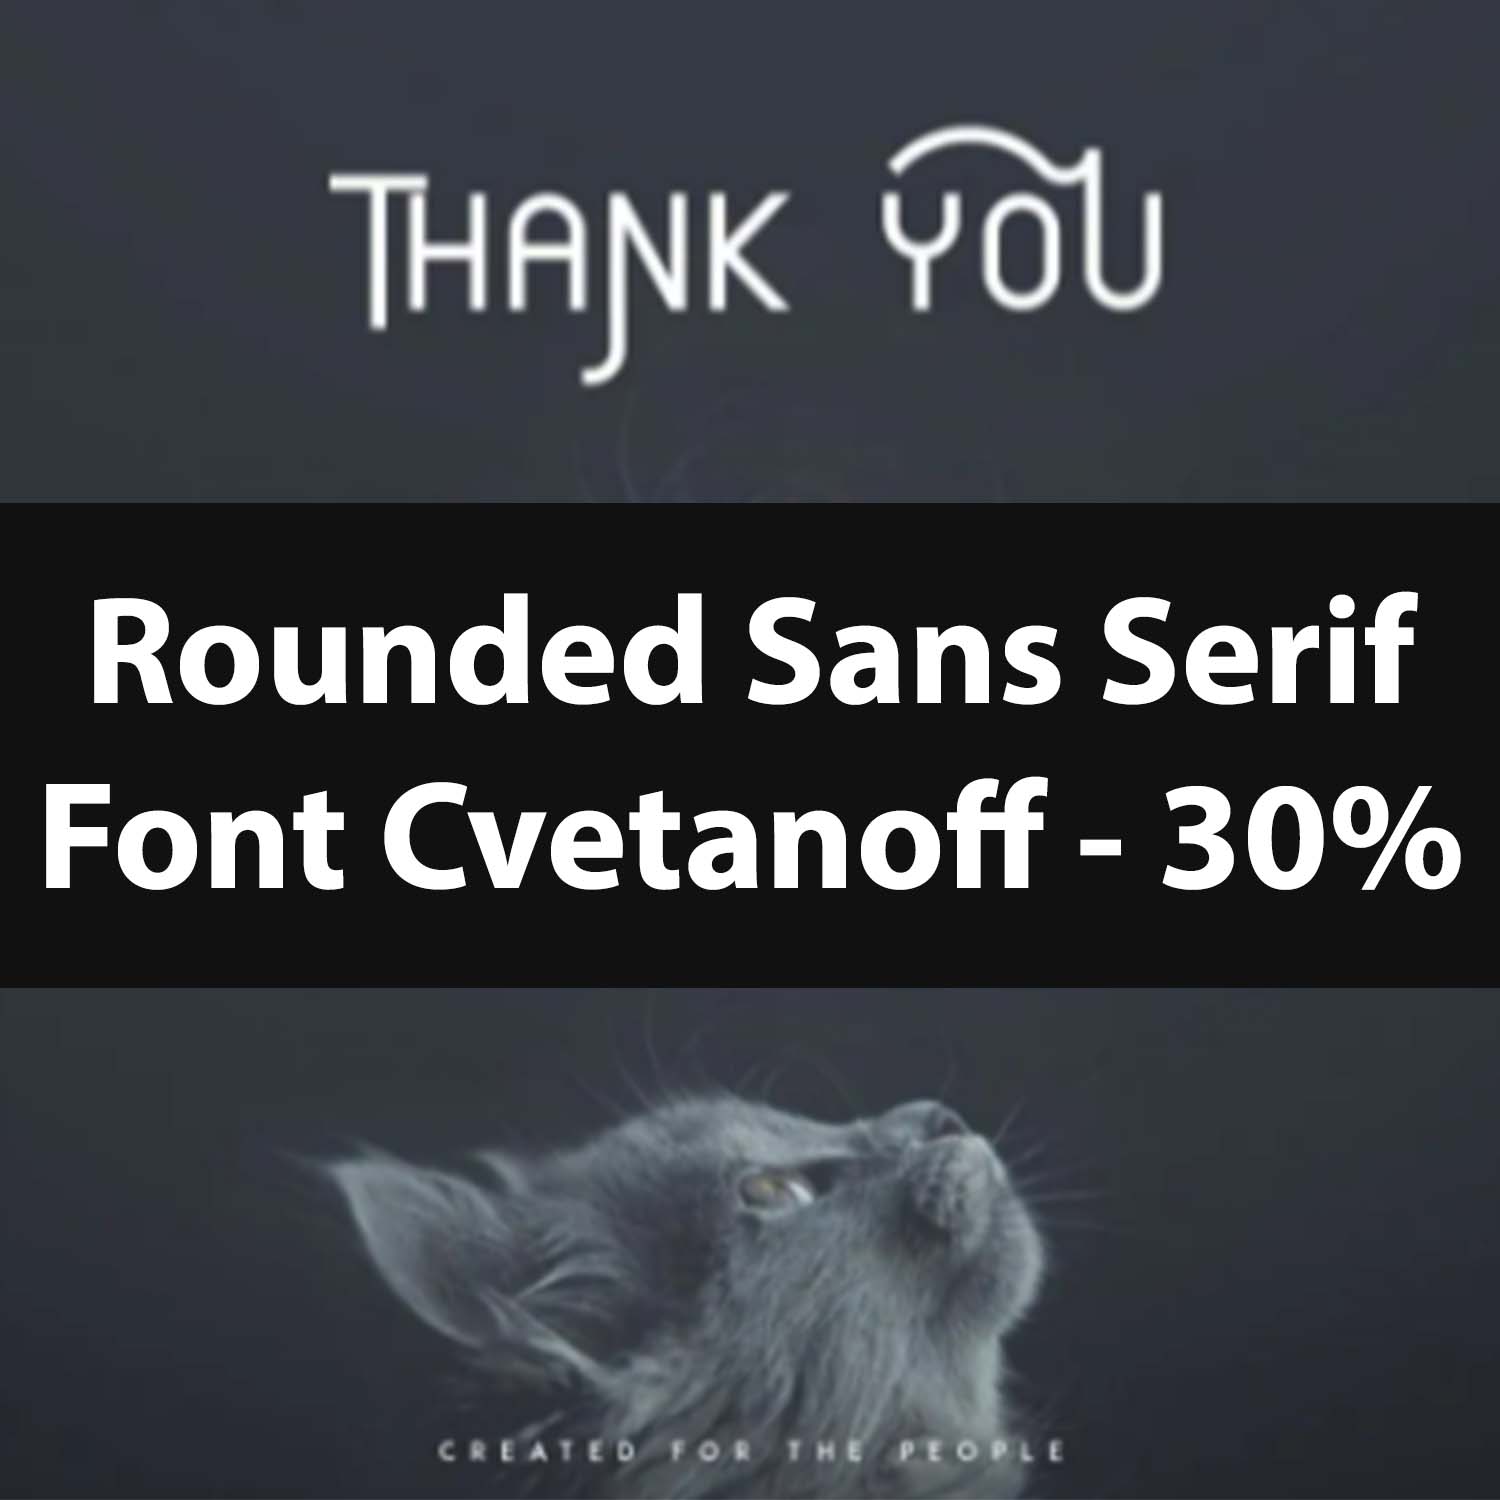 Rounded Sans Serif Font Cvetanoff cover.